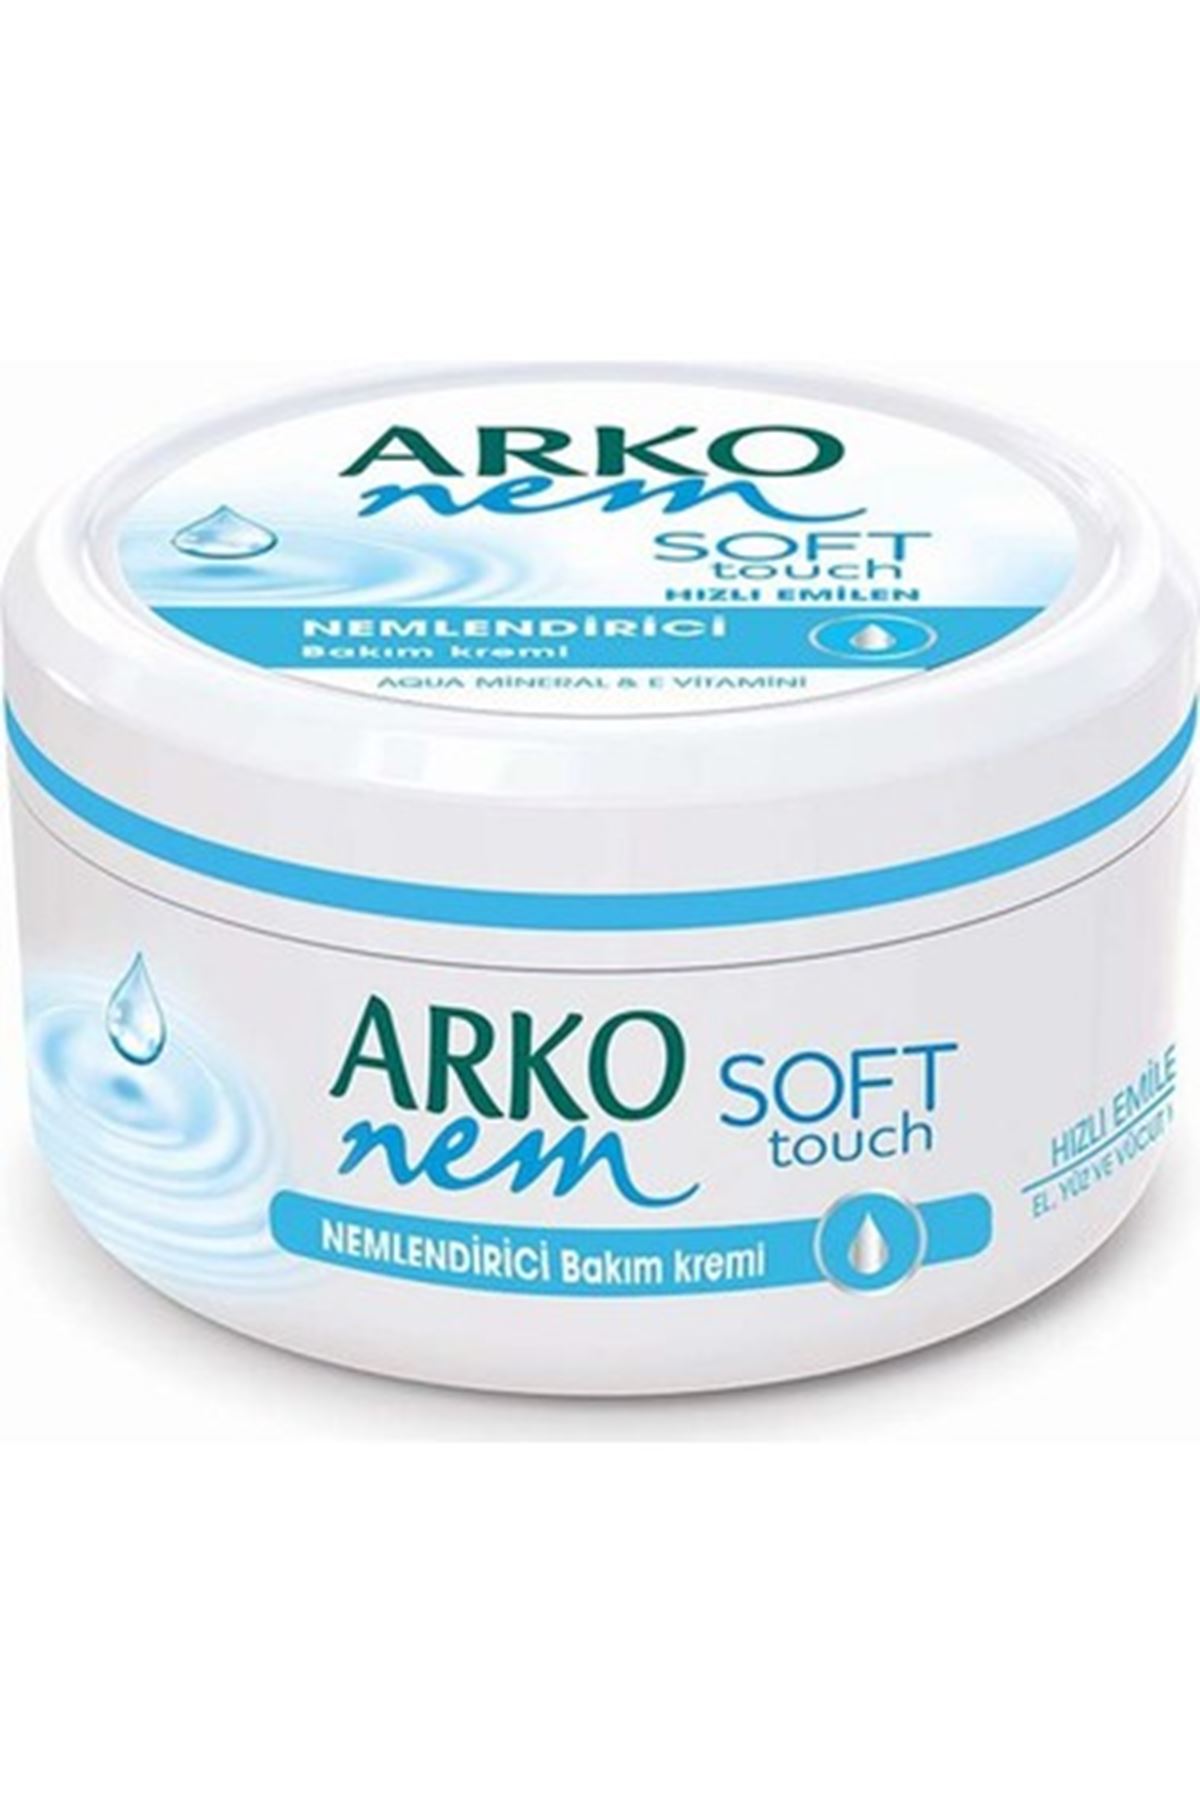 Arko Krem Soft Touch 250 ML